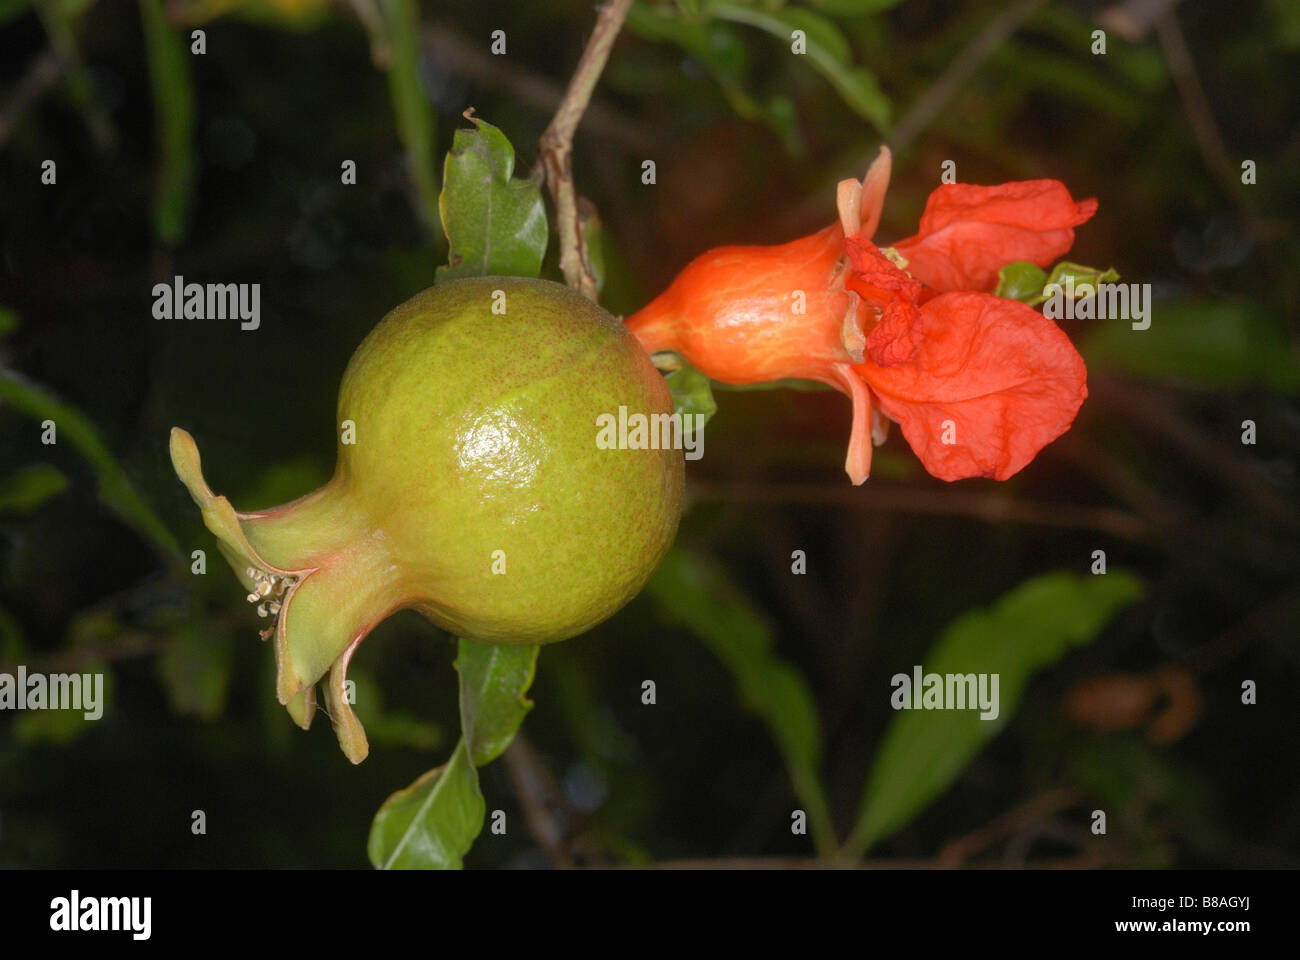 Flower and immature fruit of the pomegranate tree (Punica granatum). Stock Photo